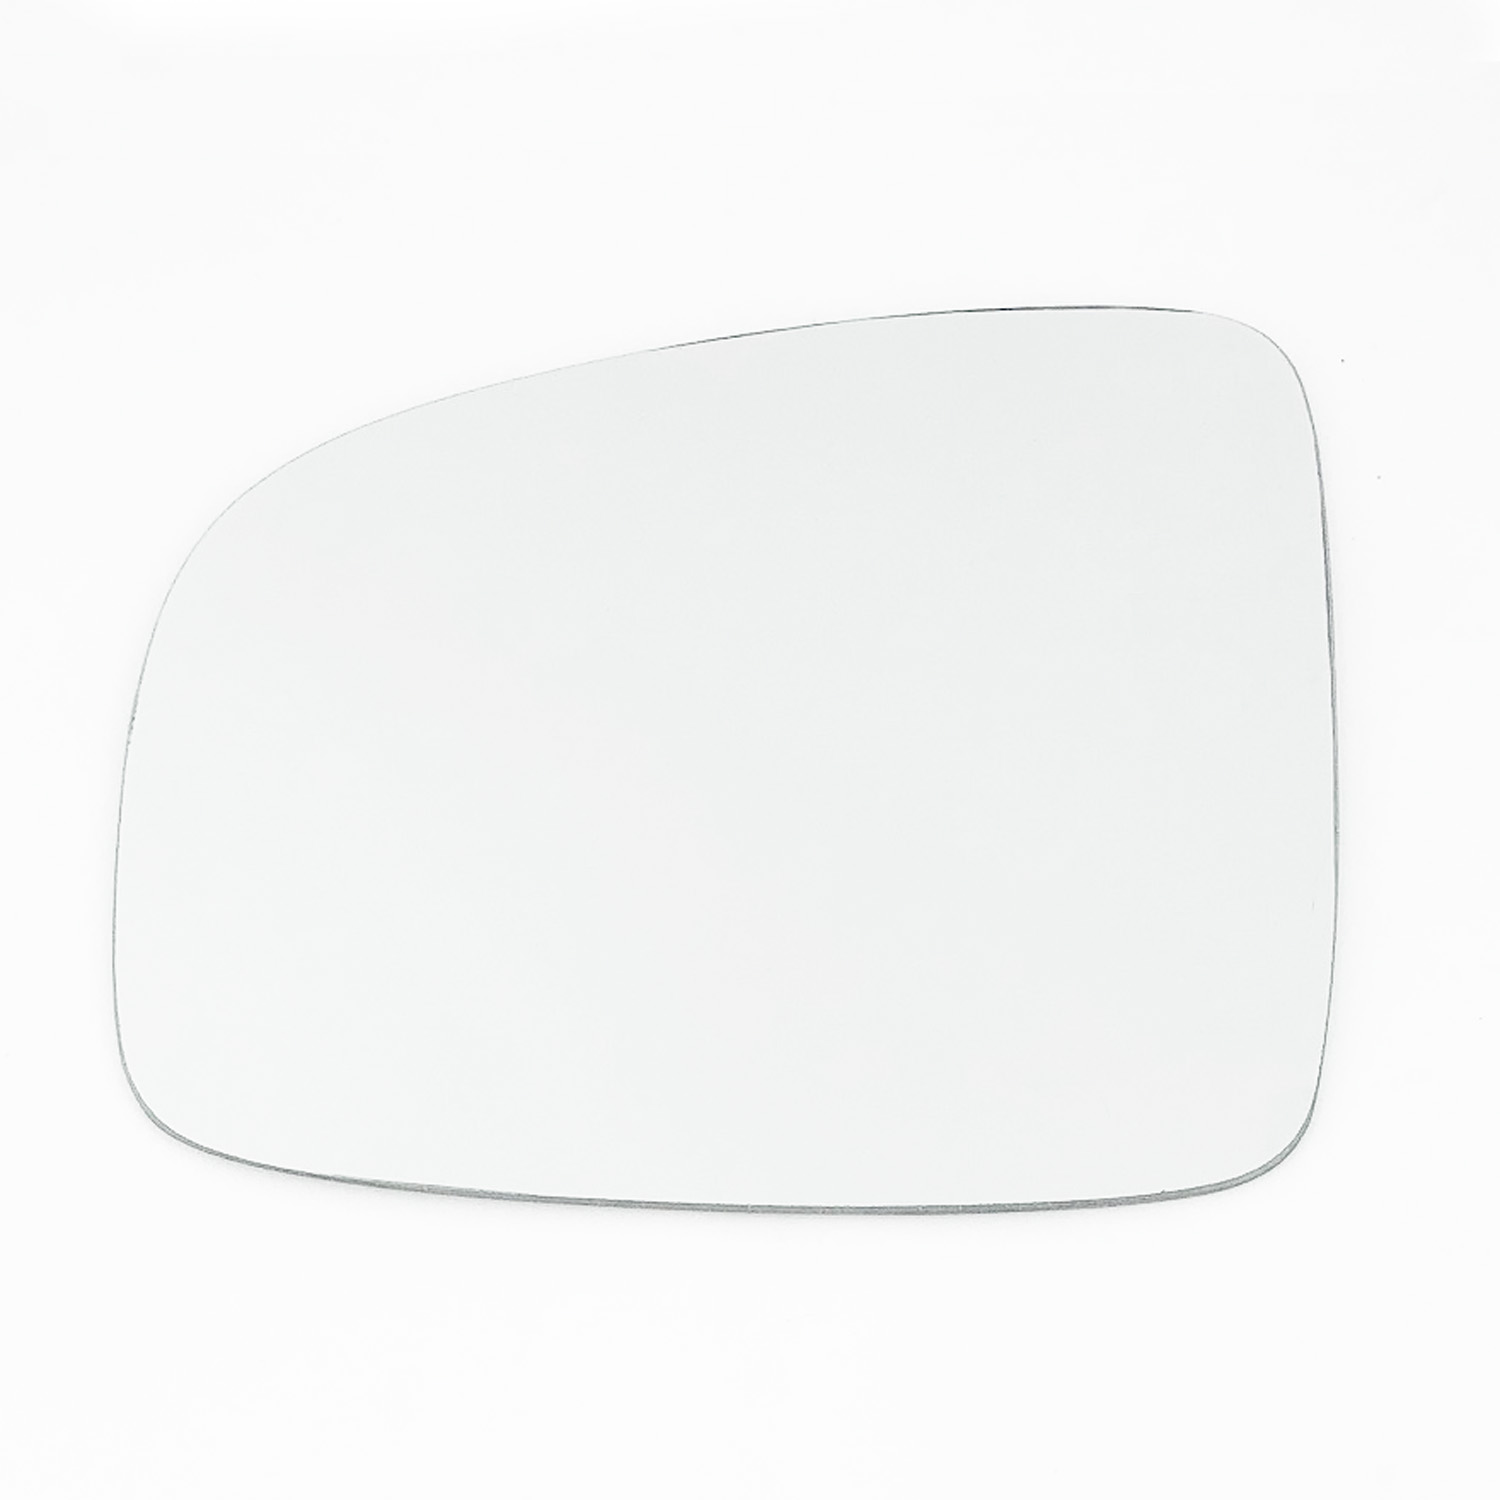 Honda Jazz Wing Mirror Glass LEFT HAND ( UK Passenger Side ) 2016 to 2020 – Convex Wing Mirror